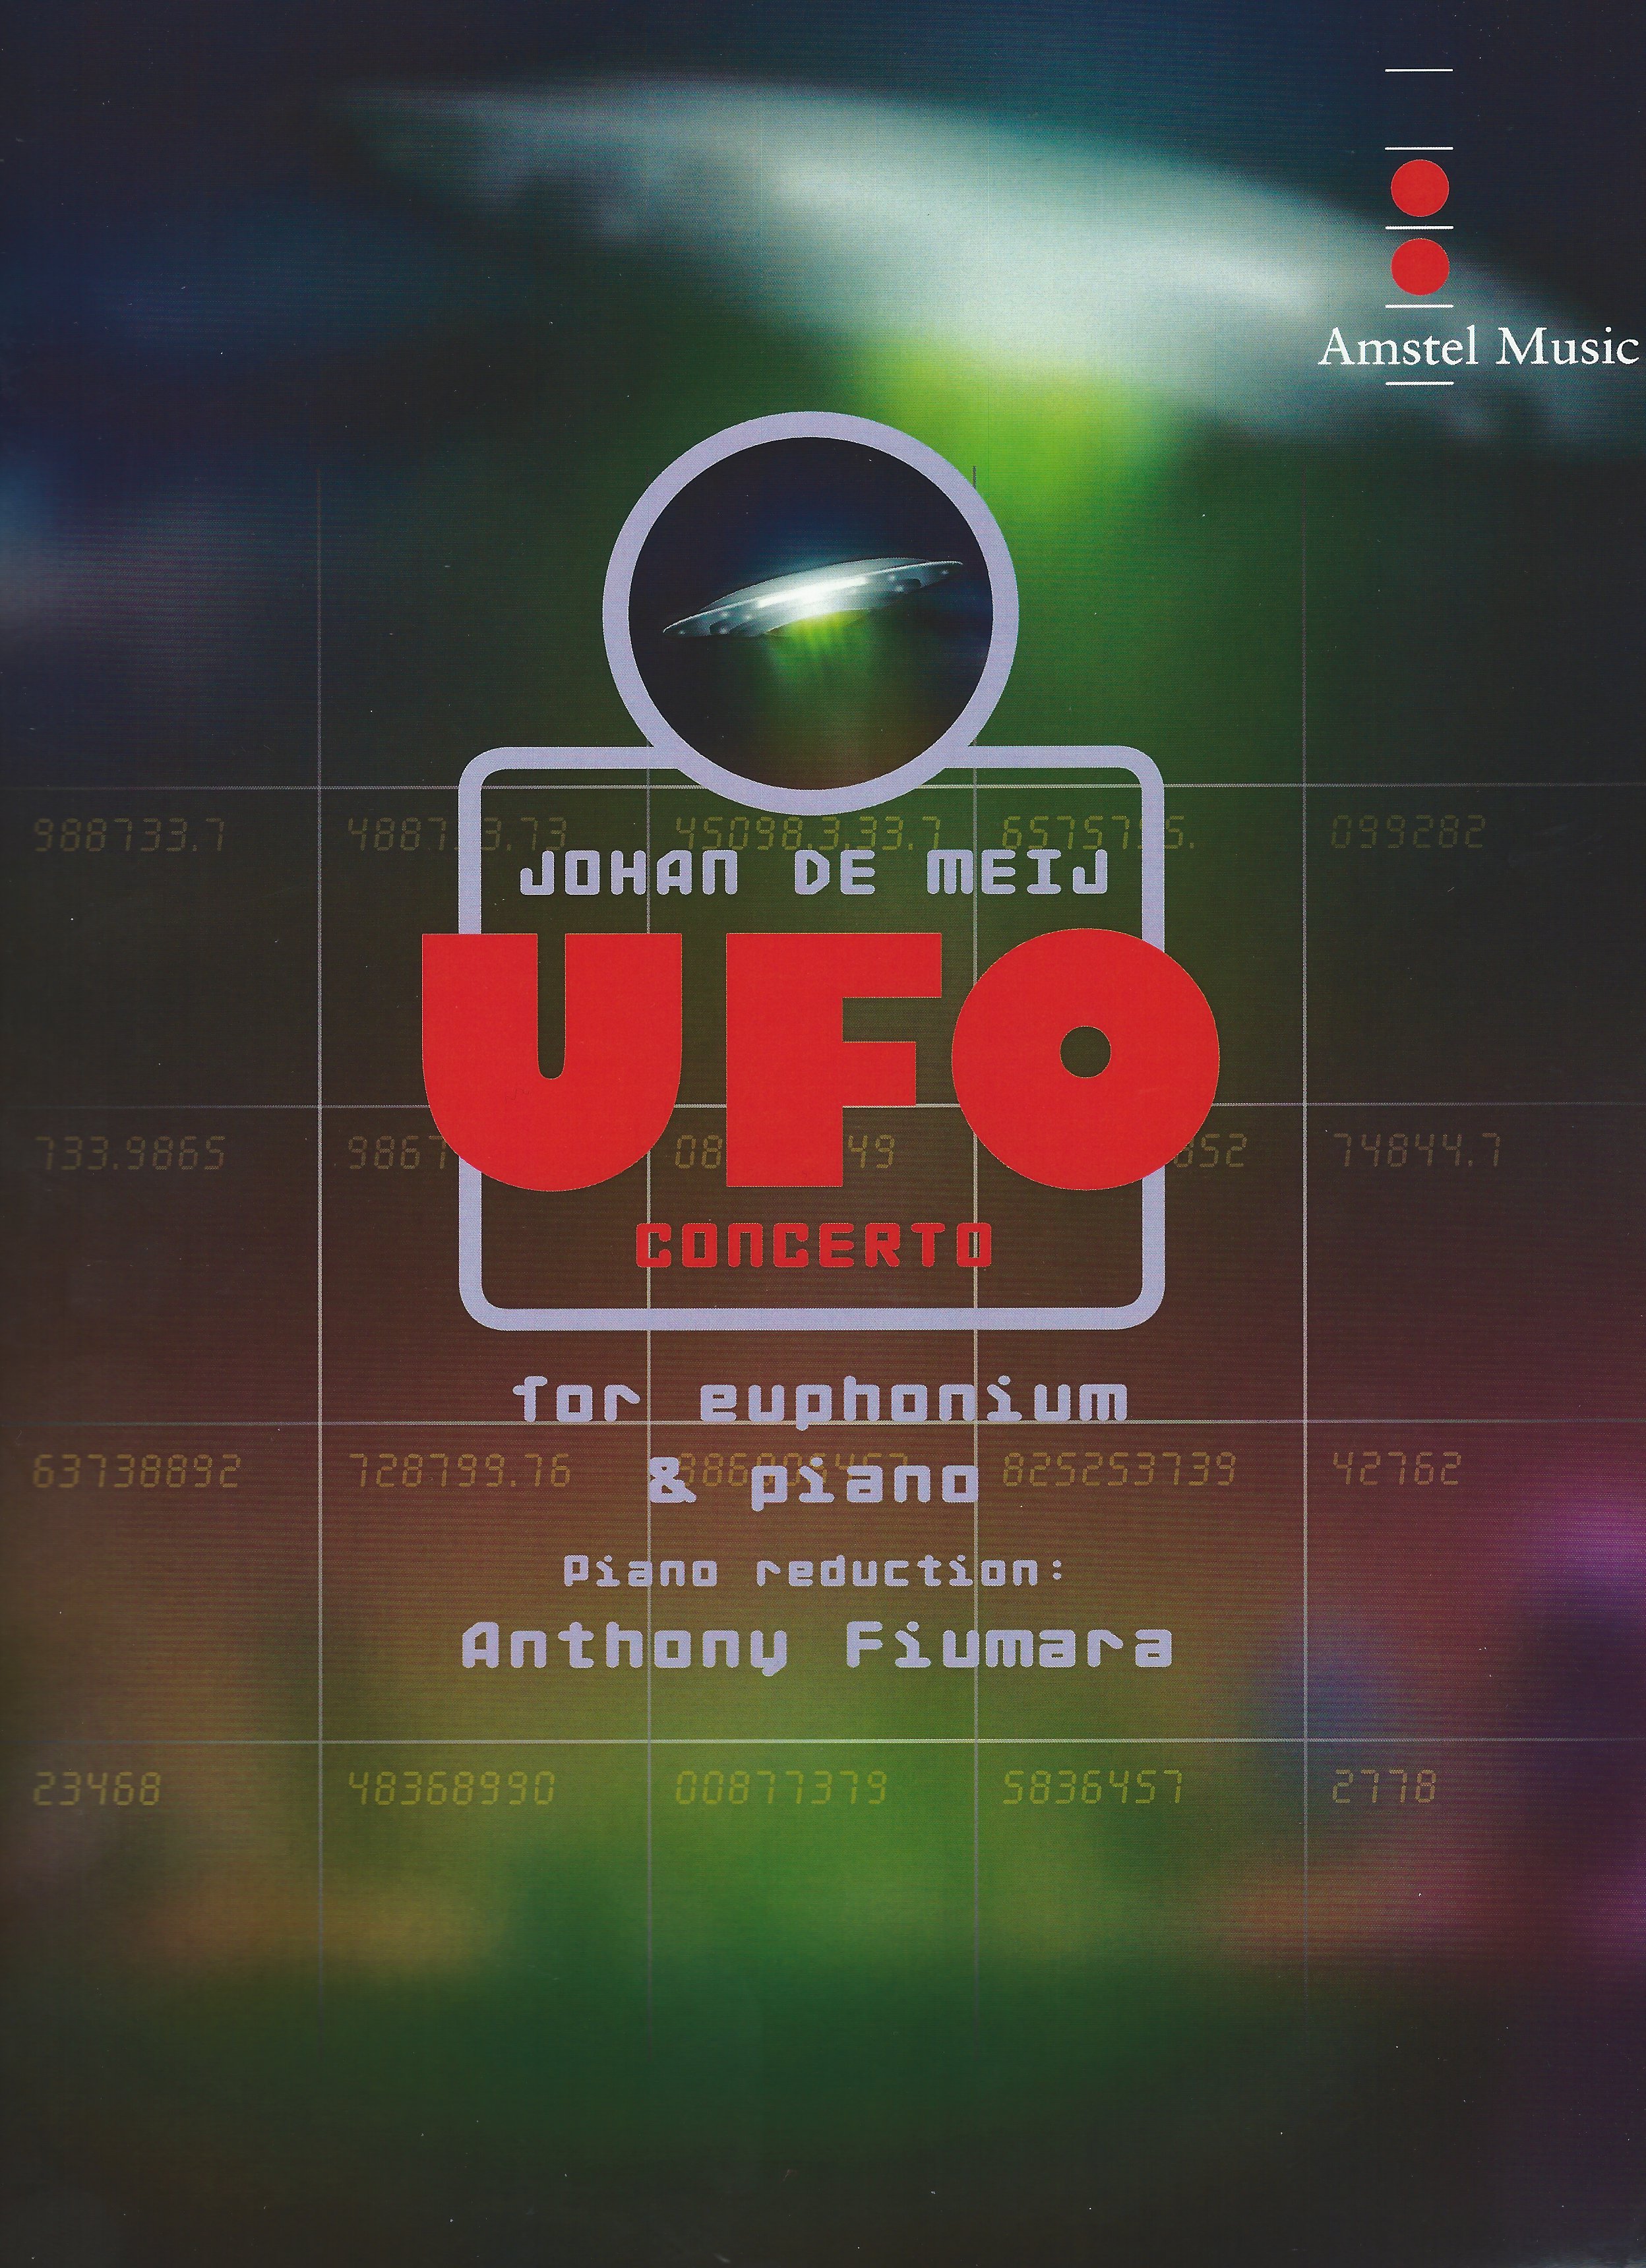 UFO Concerto - Johan de Meij - euphonium and piano version  